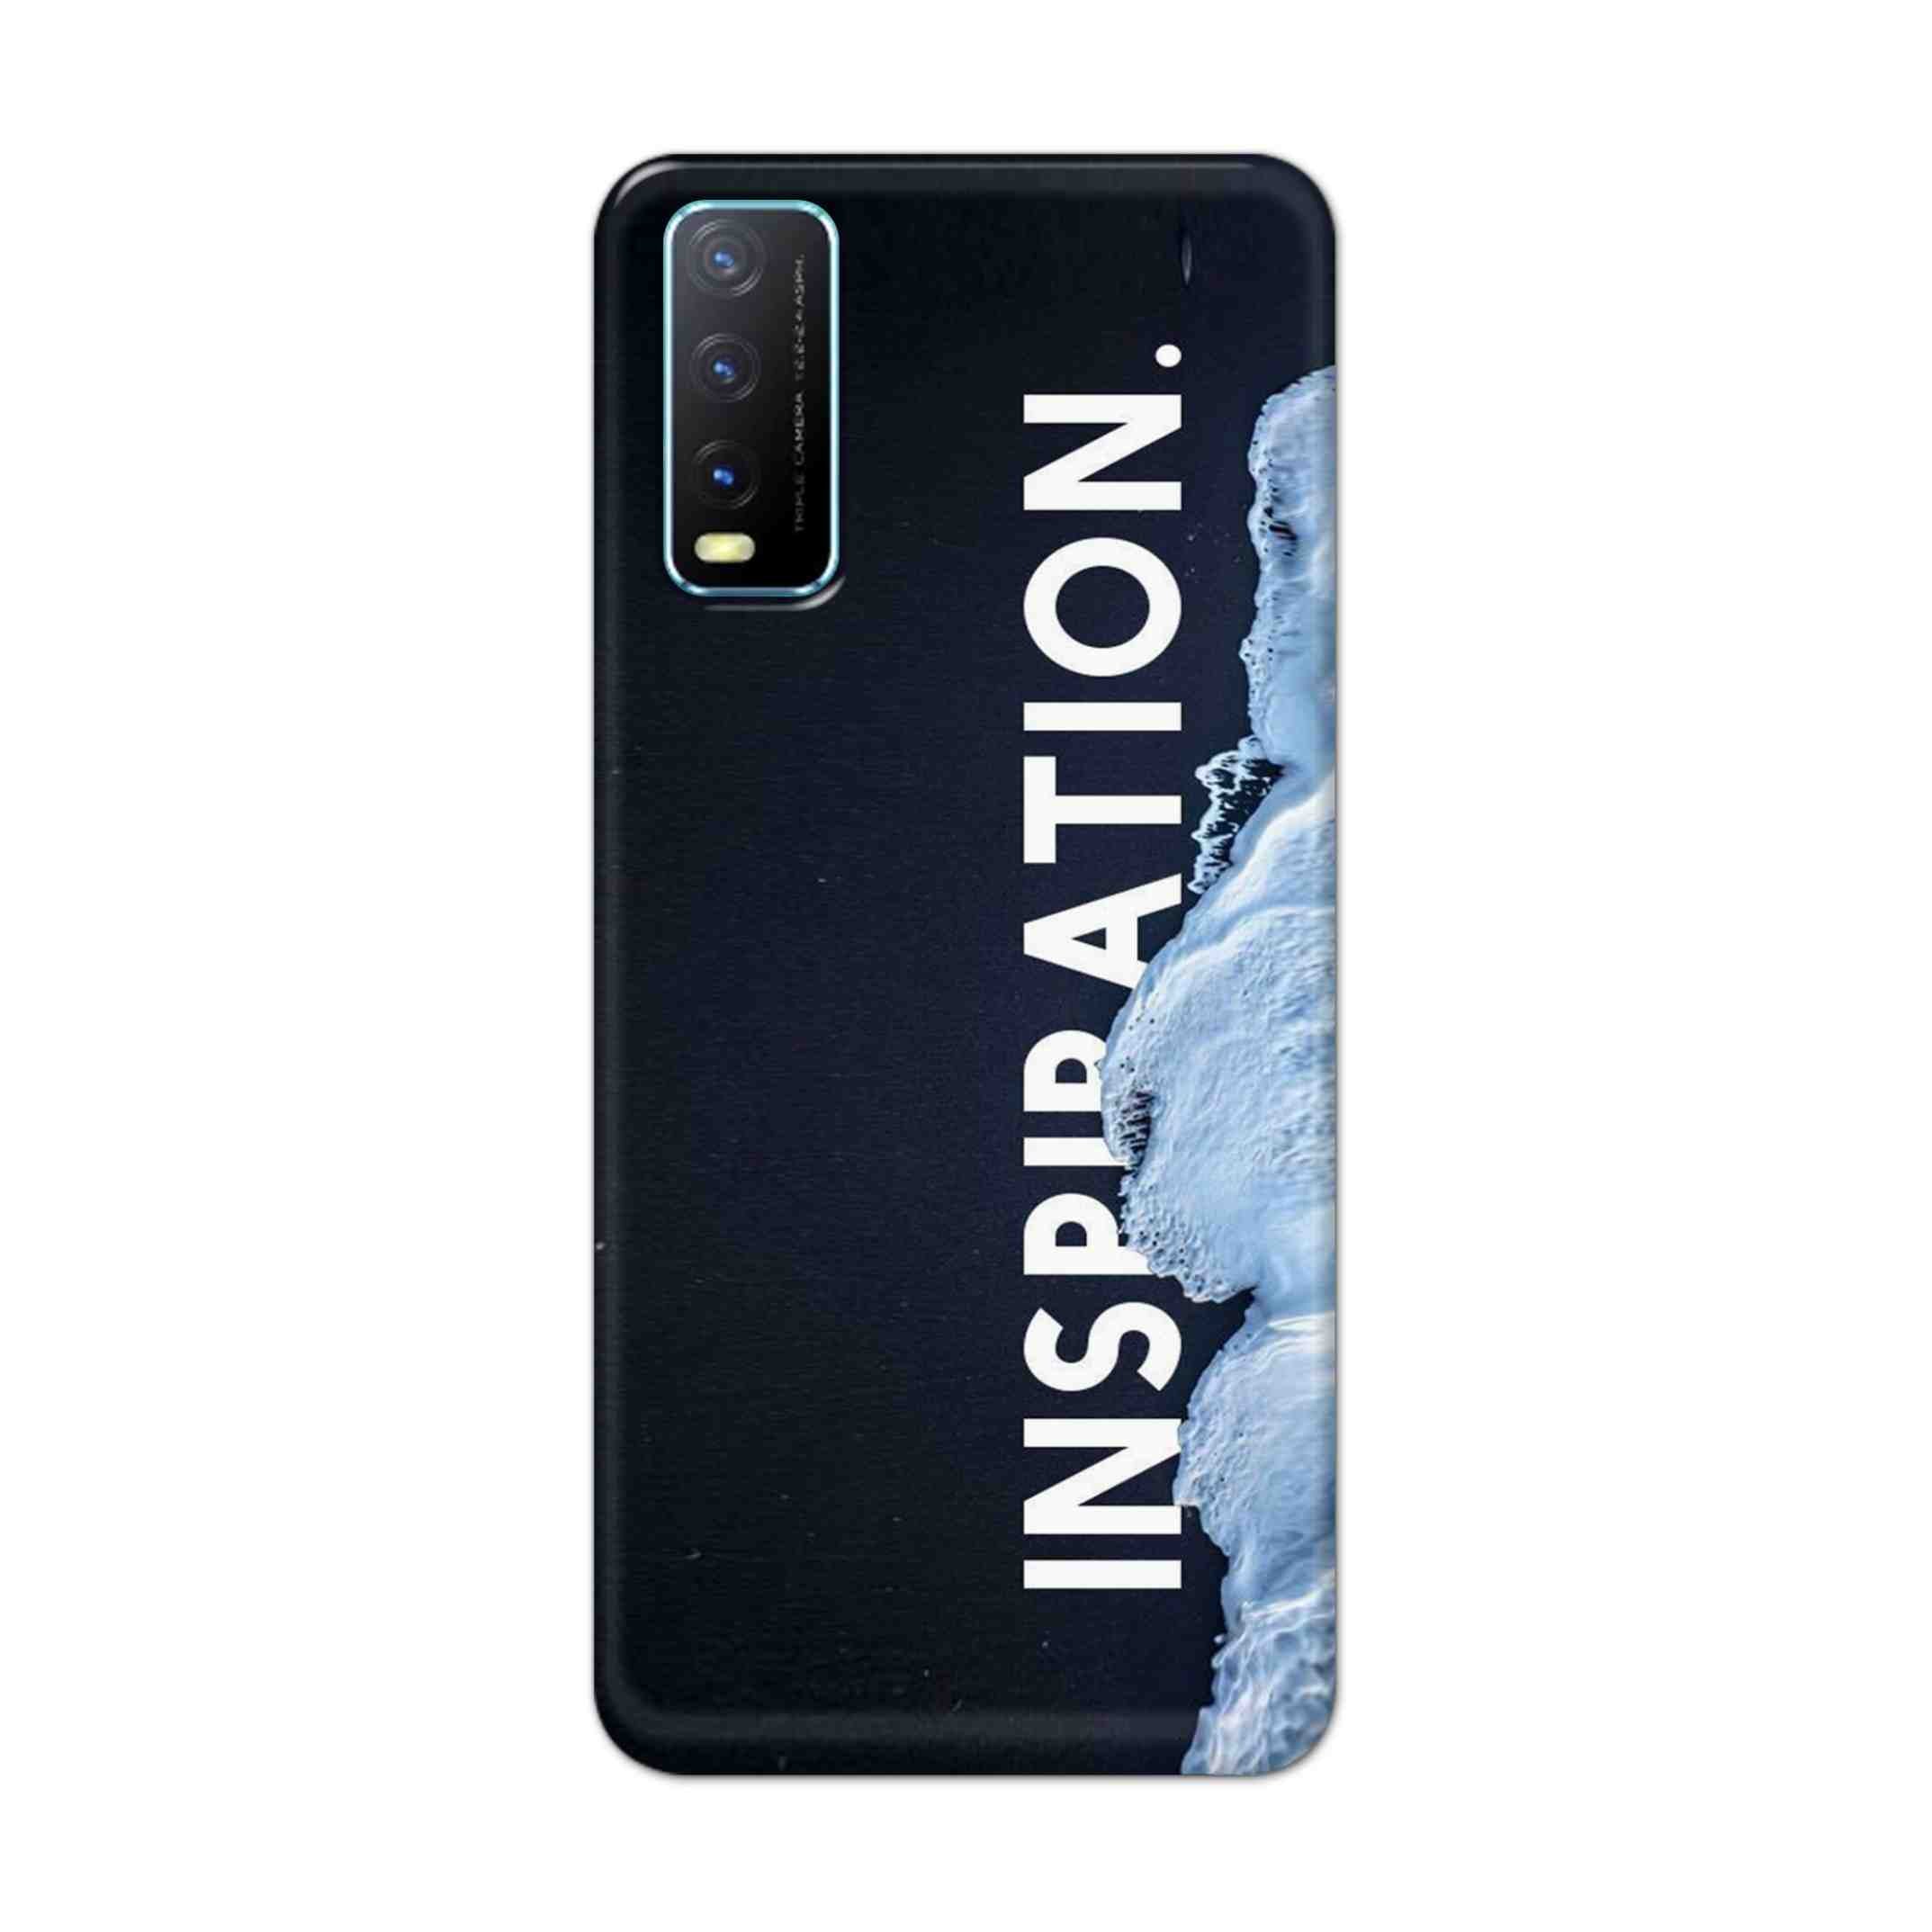 Buy Inspiration Hard Back Mobile Phone Case Cover For Vivo Y20 Online